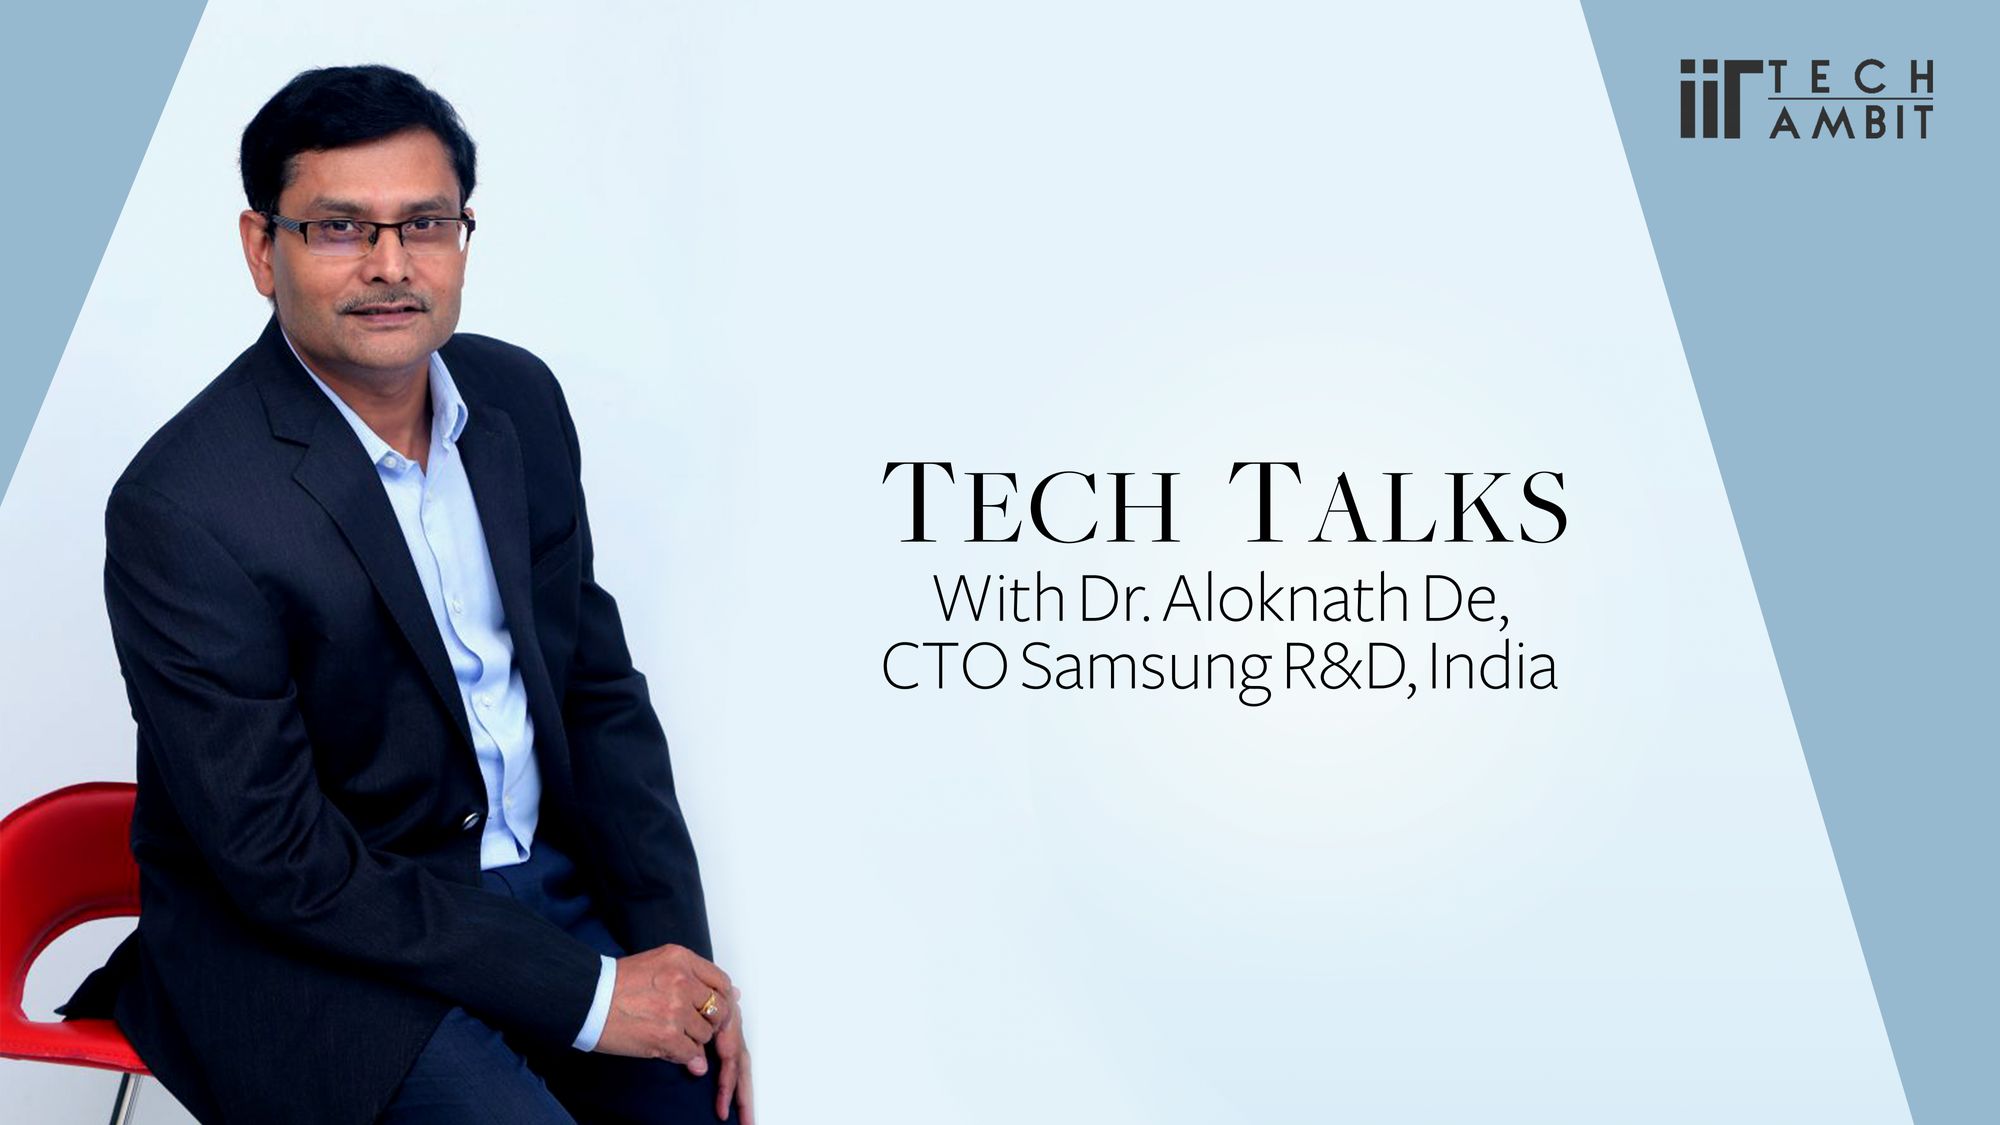 Tech Talks with Dr.Aloknath De, CTO Samsung R&D, India